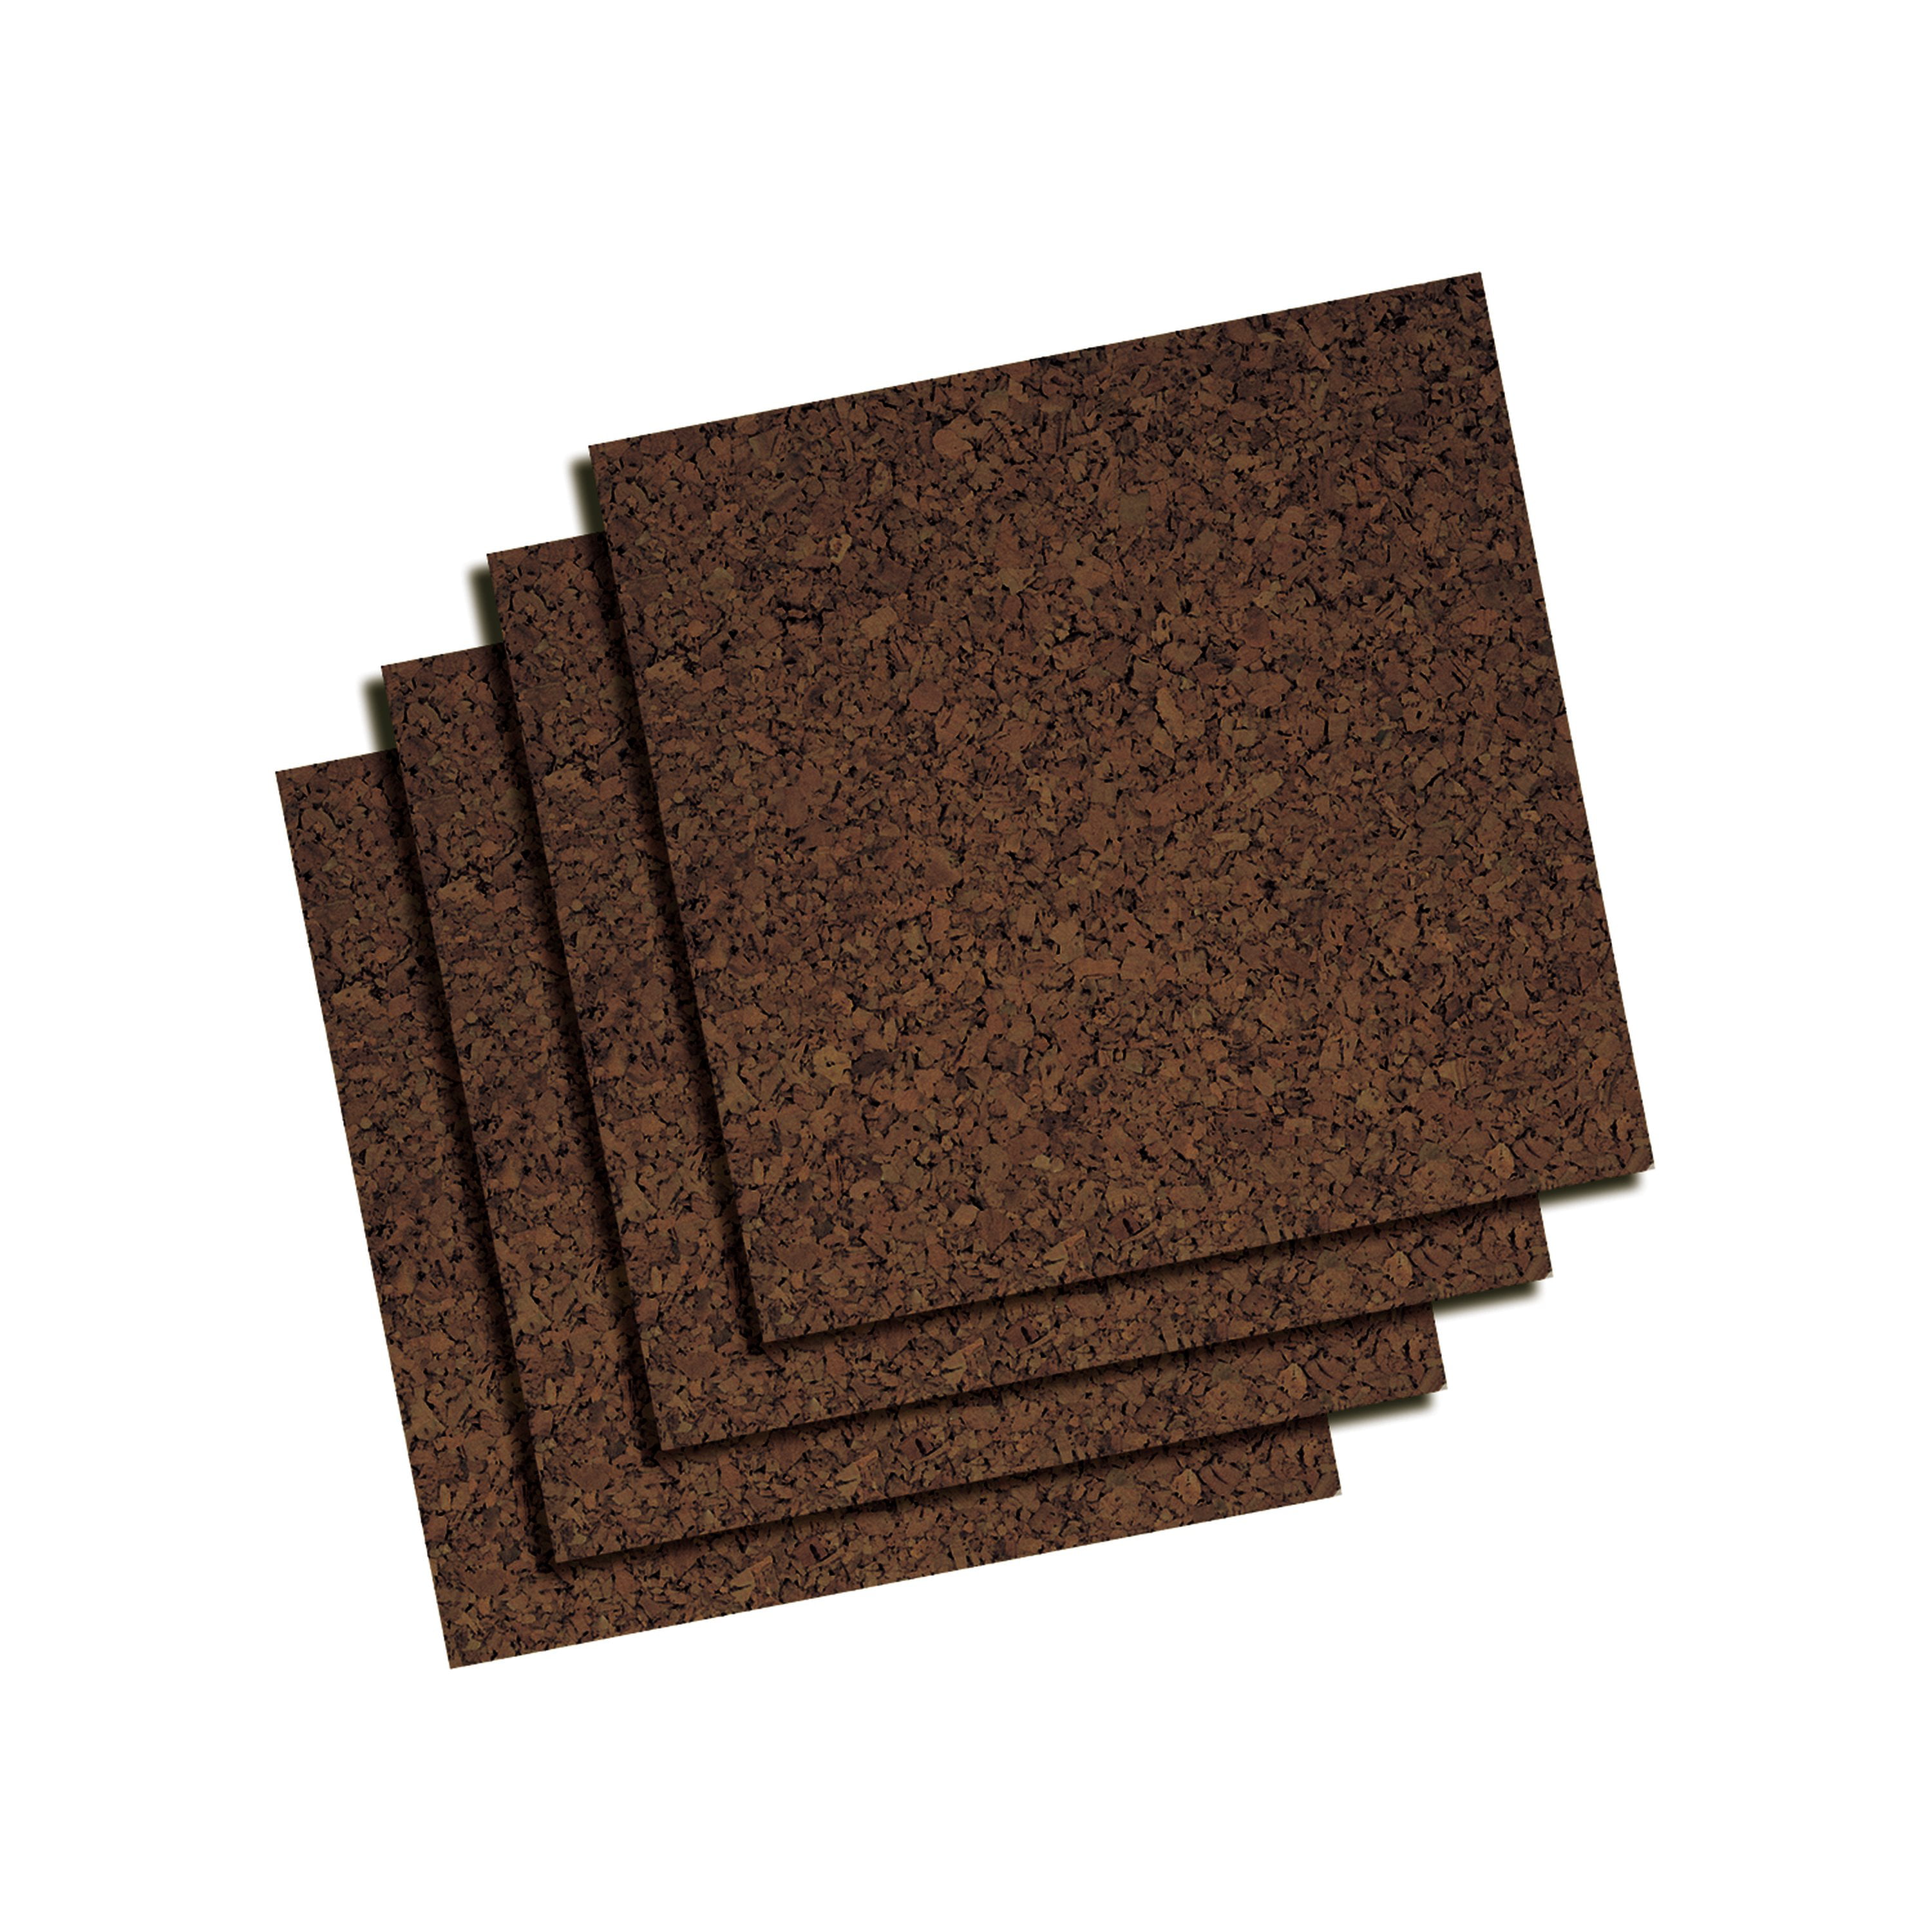 New Cork Tiles Dark 4 Pack Corkboard Wall Bulletin Boards Cork Board 12 x 12